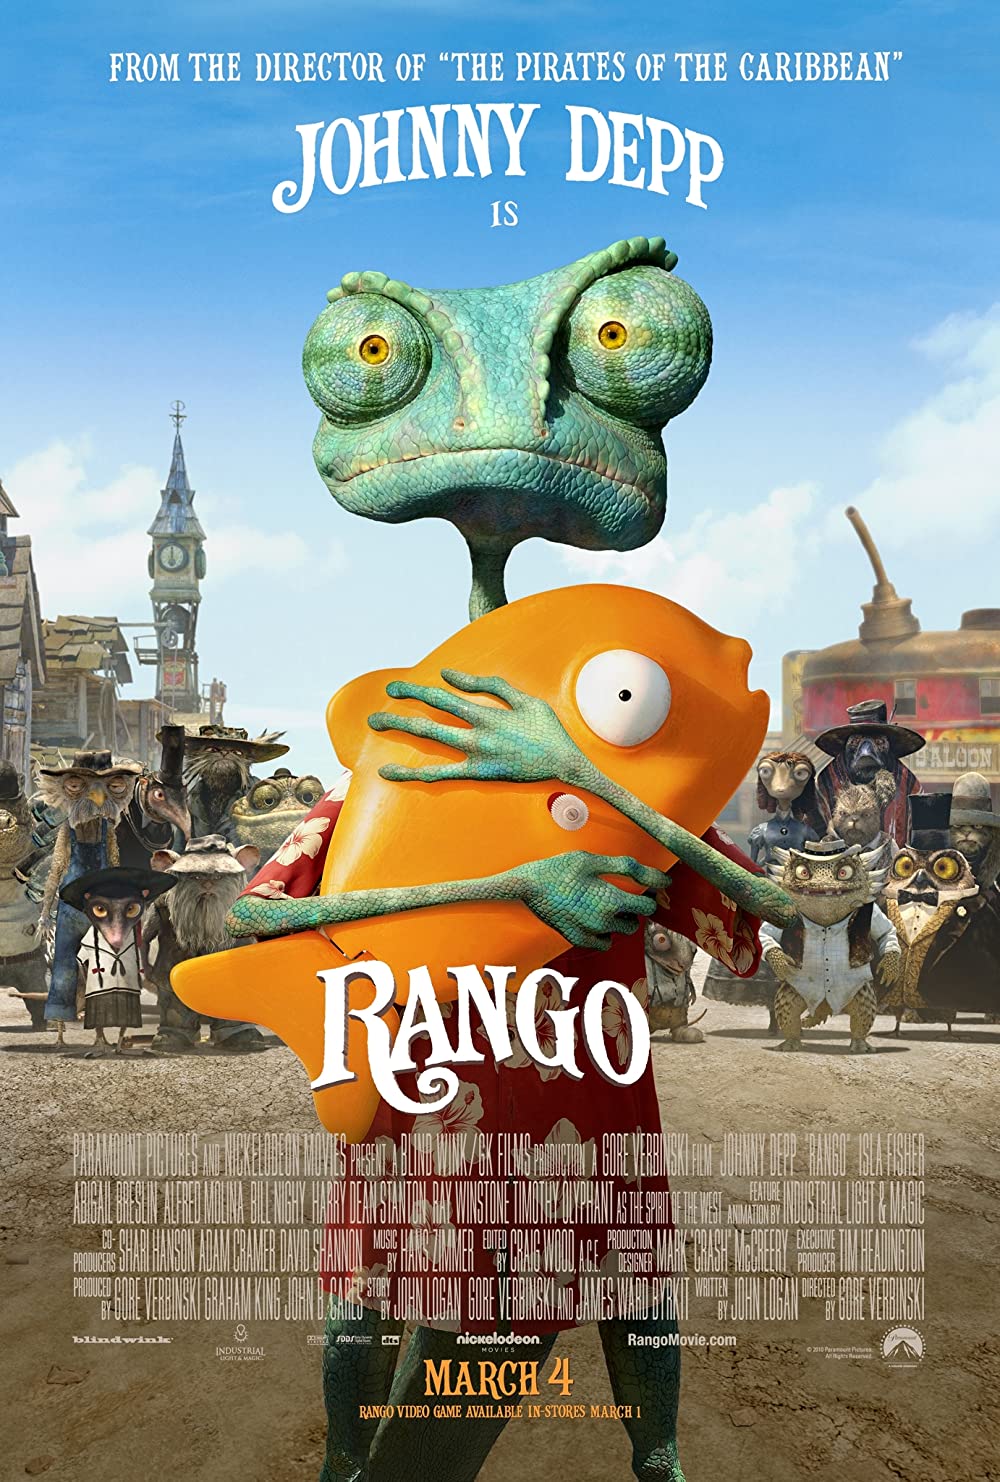 FULL MOVIE: Rango (2011) [Adventure]